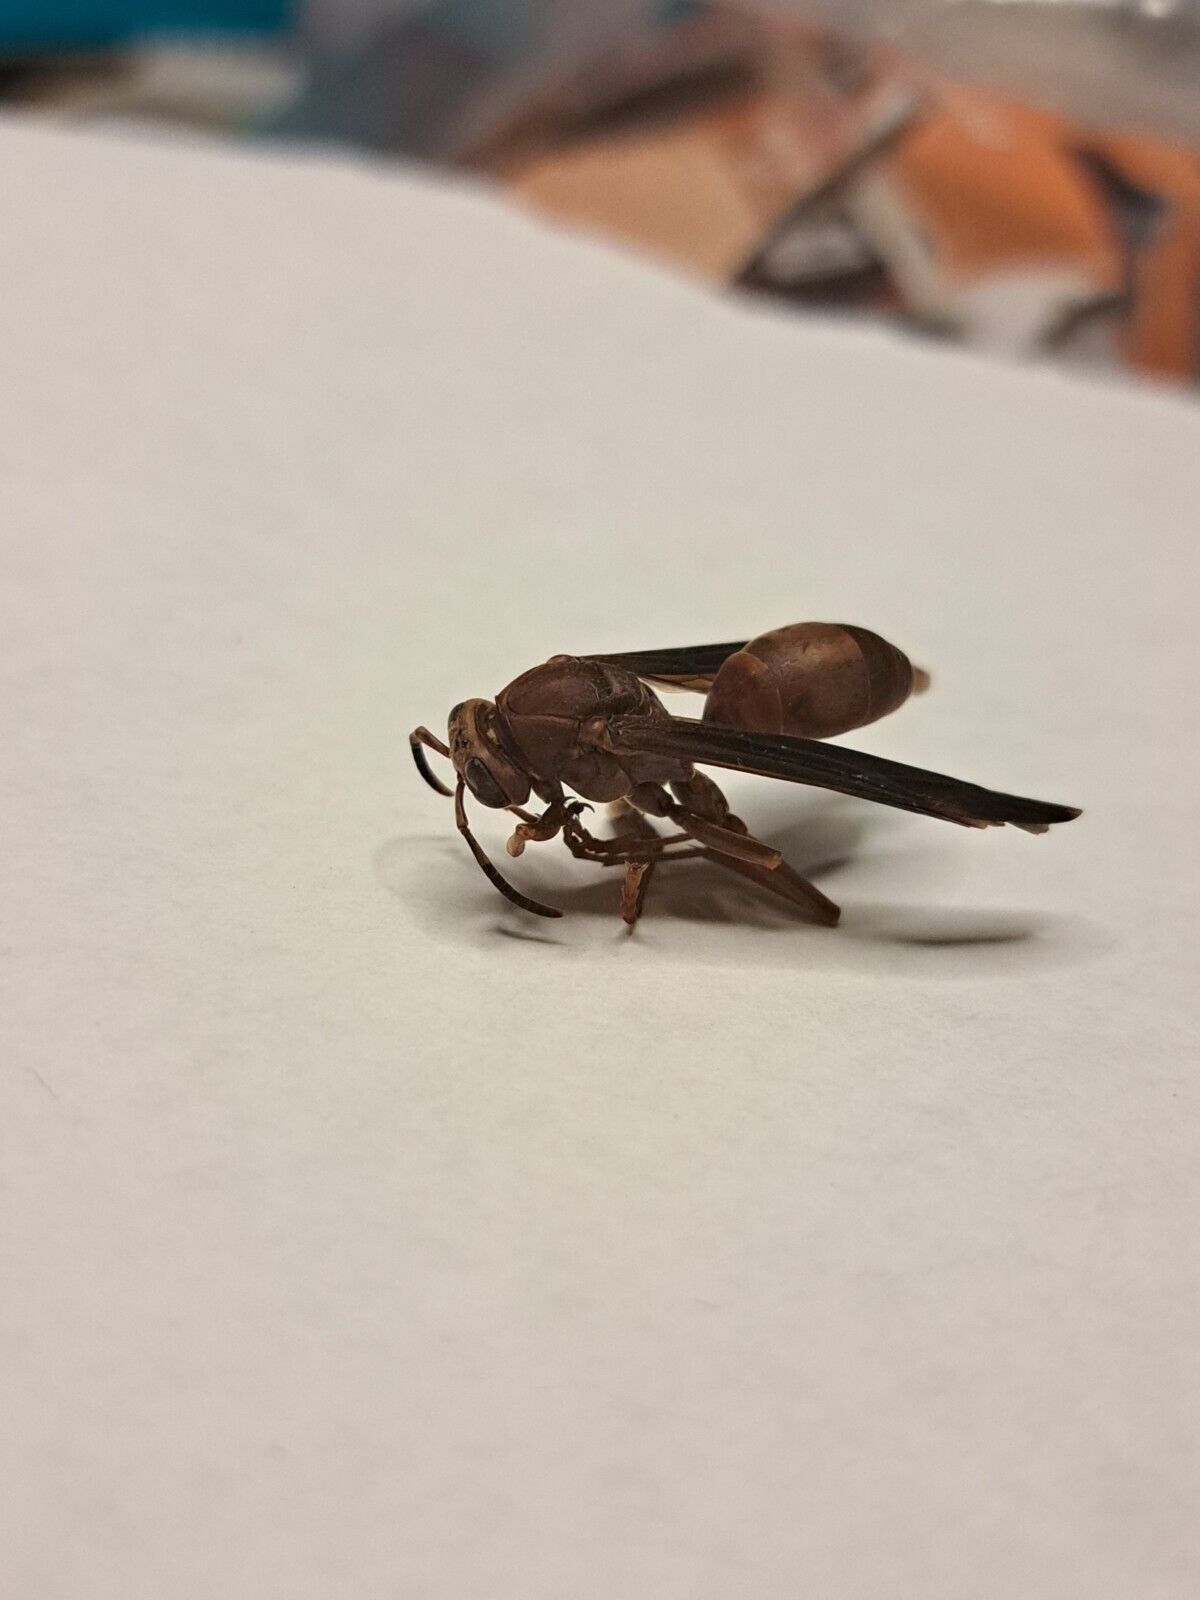 A Wasp